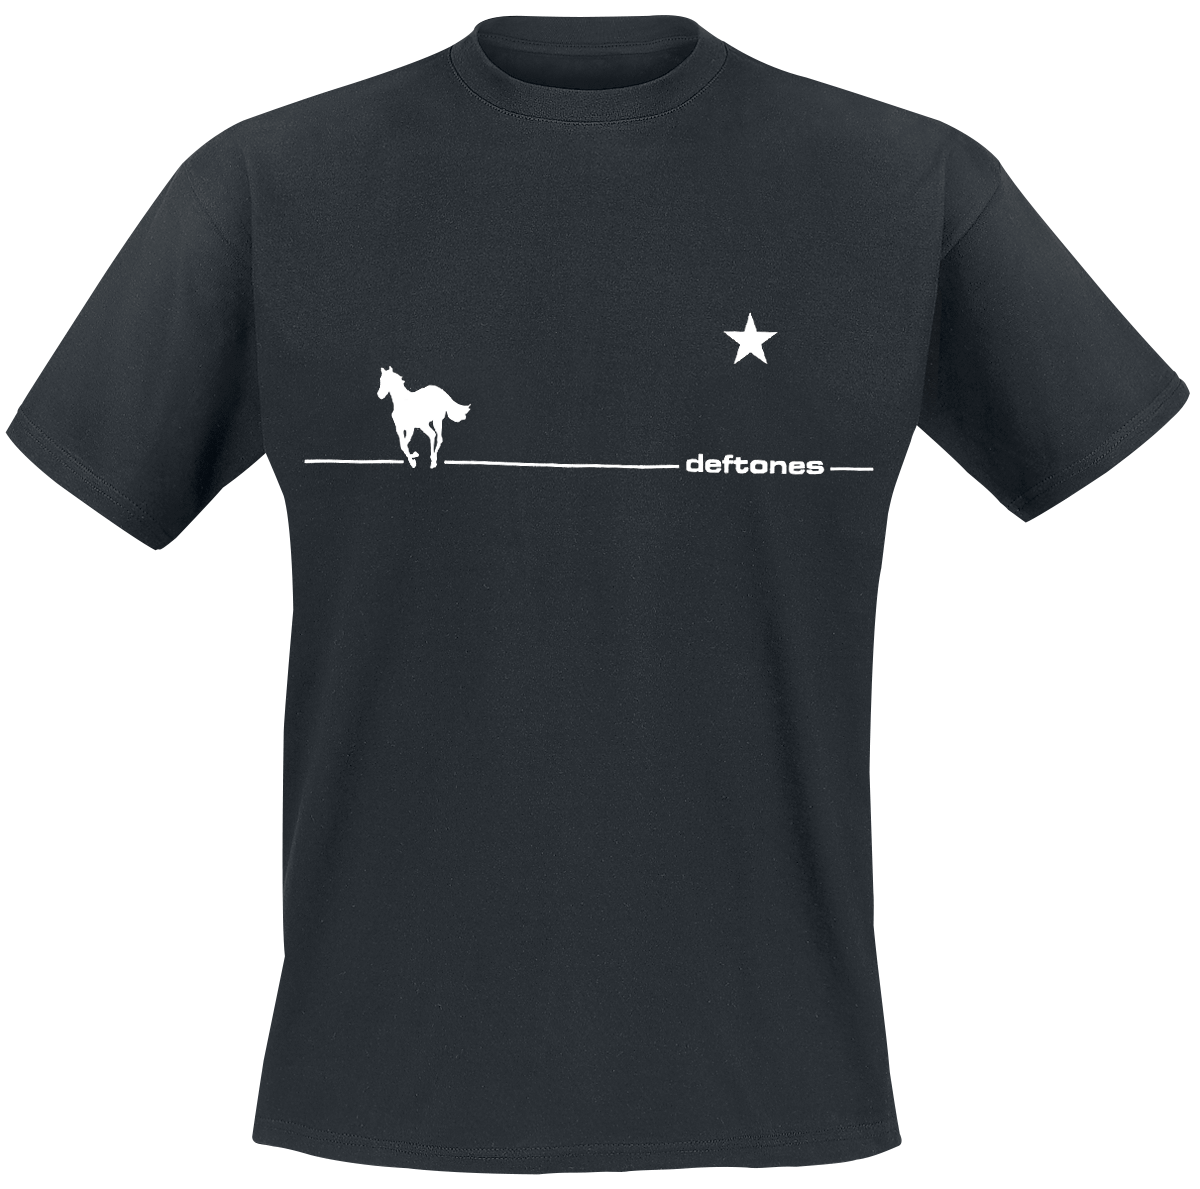 Deftones - White Pony - T-Shirt - black image